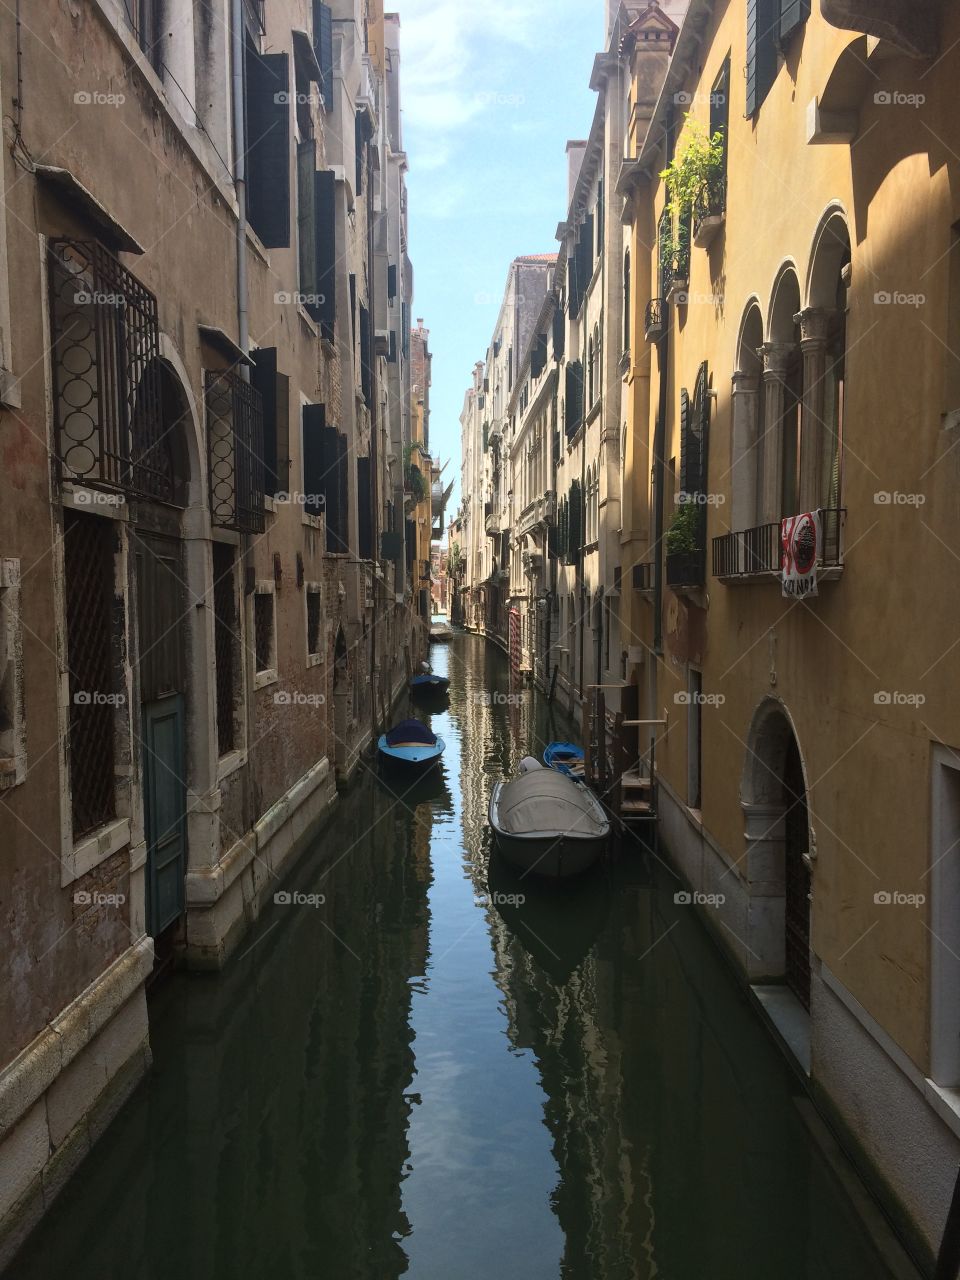 Venice “Road”